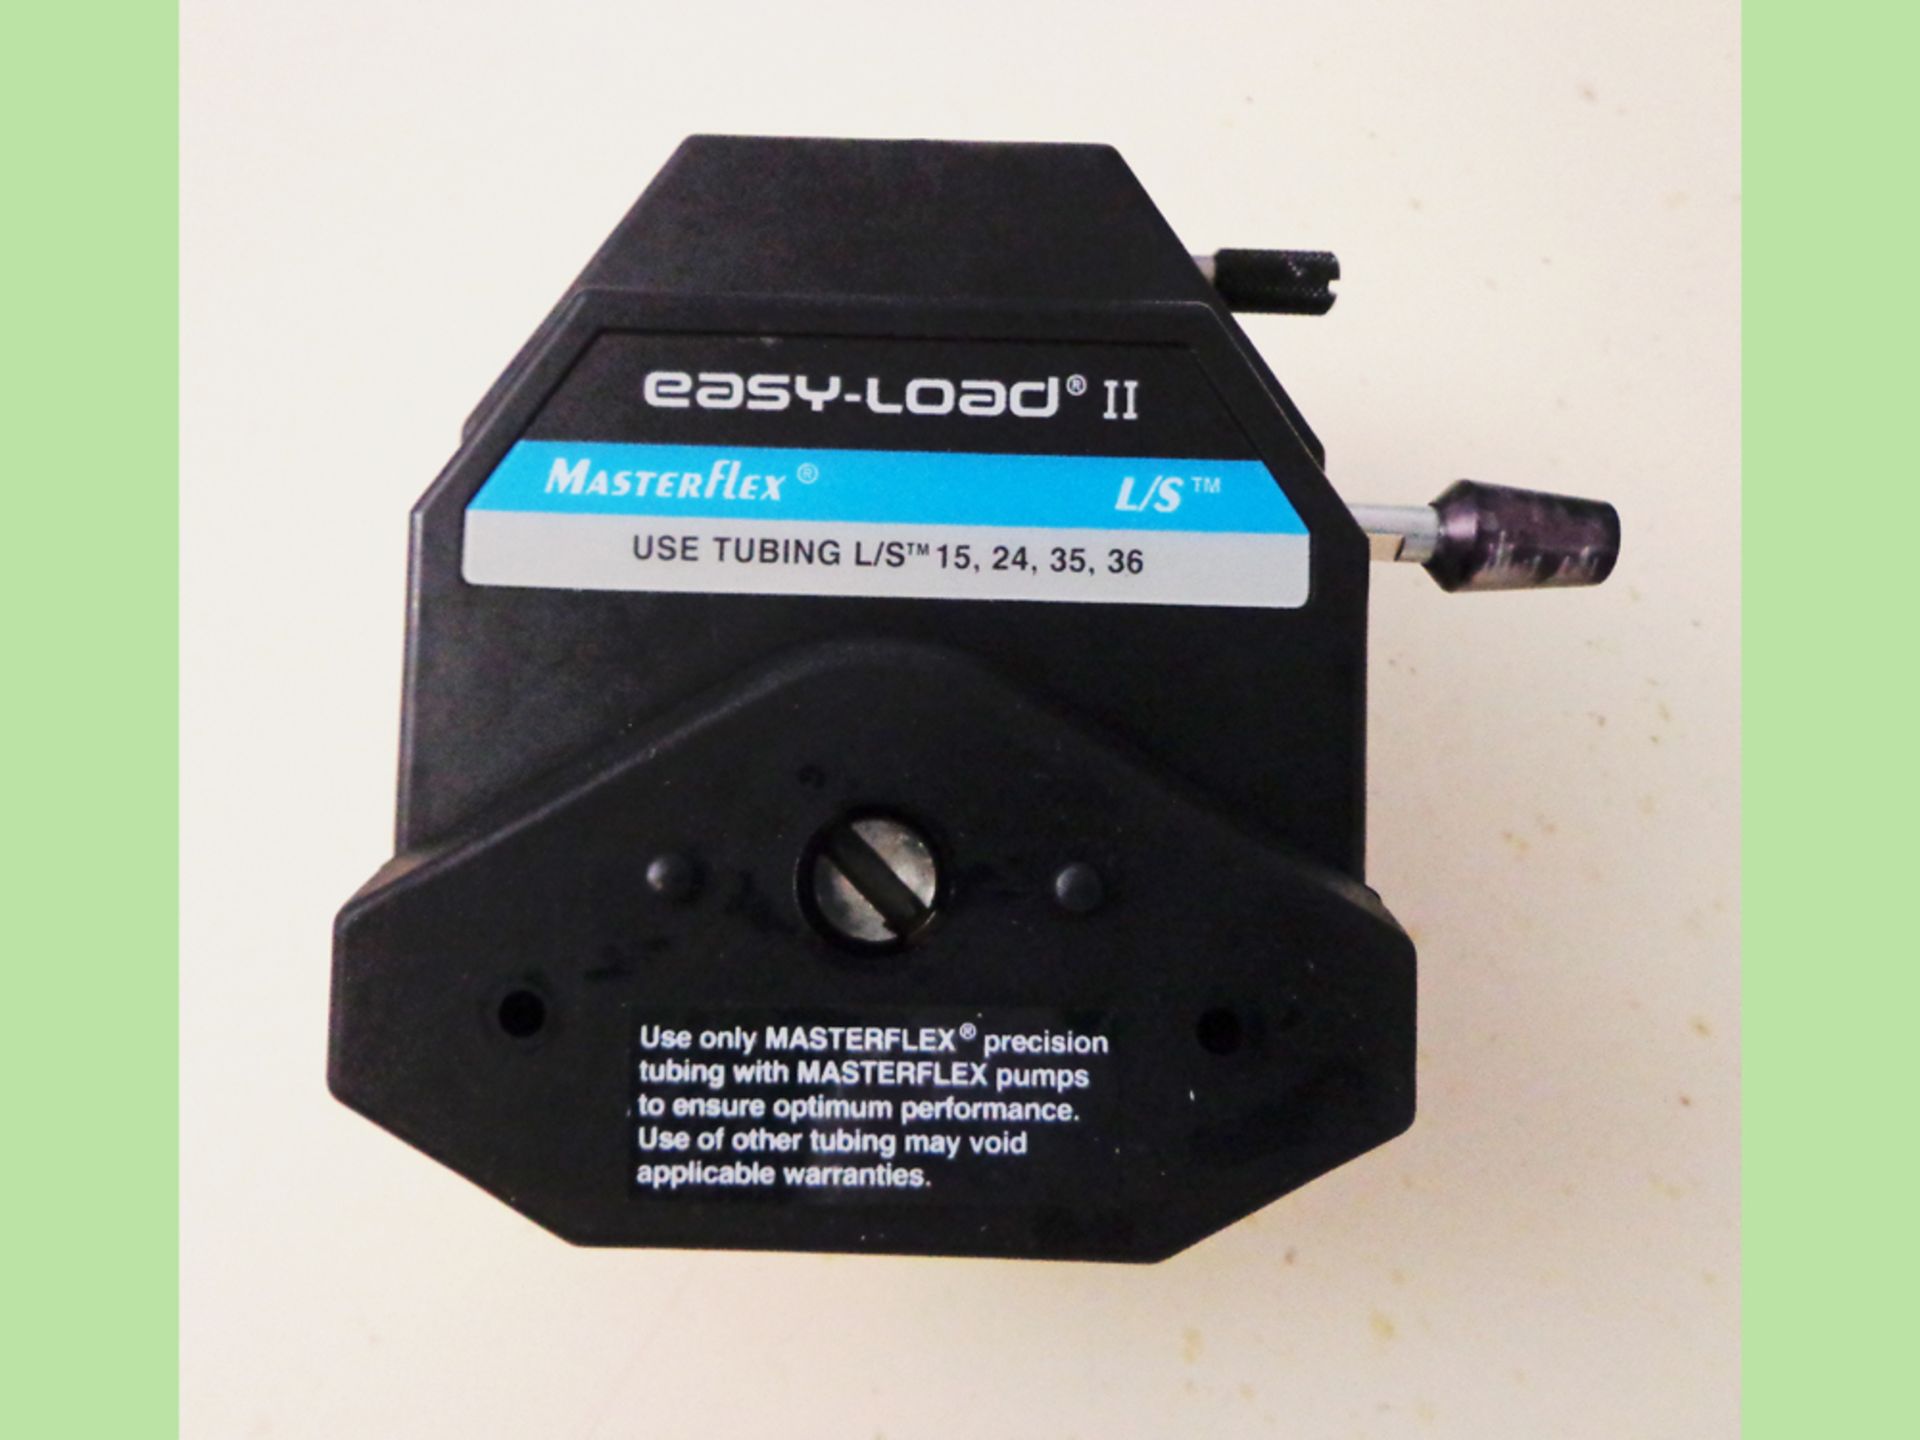 Masterflex L/S 15, 24, 35 and 36 Easy-Load II Pump Head, Model 77201-62, S/N C97001469